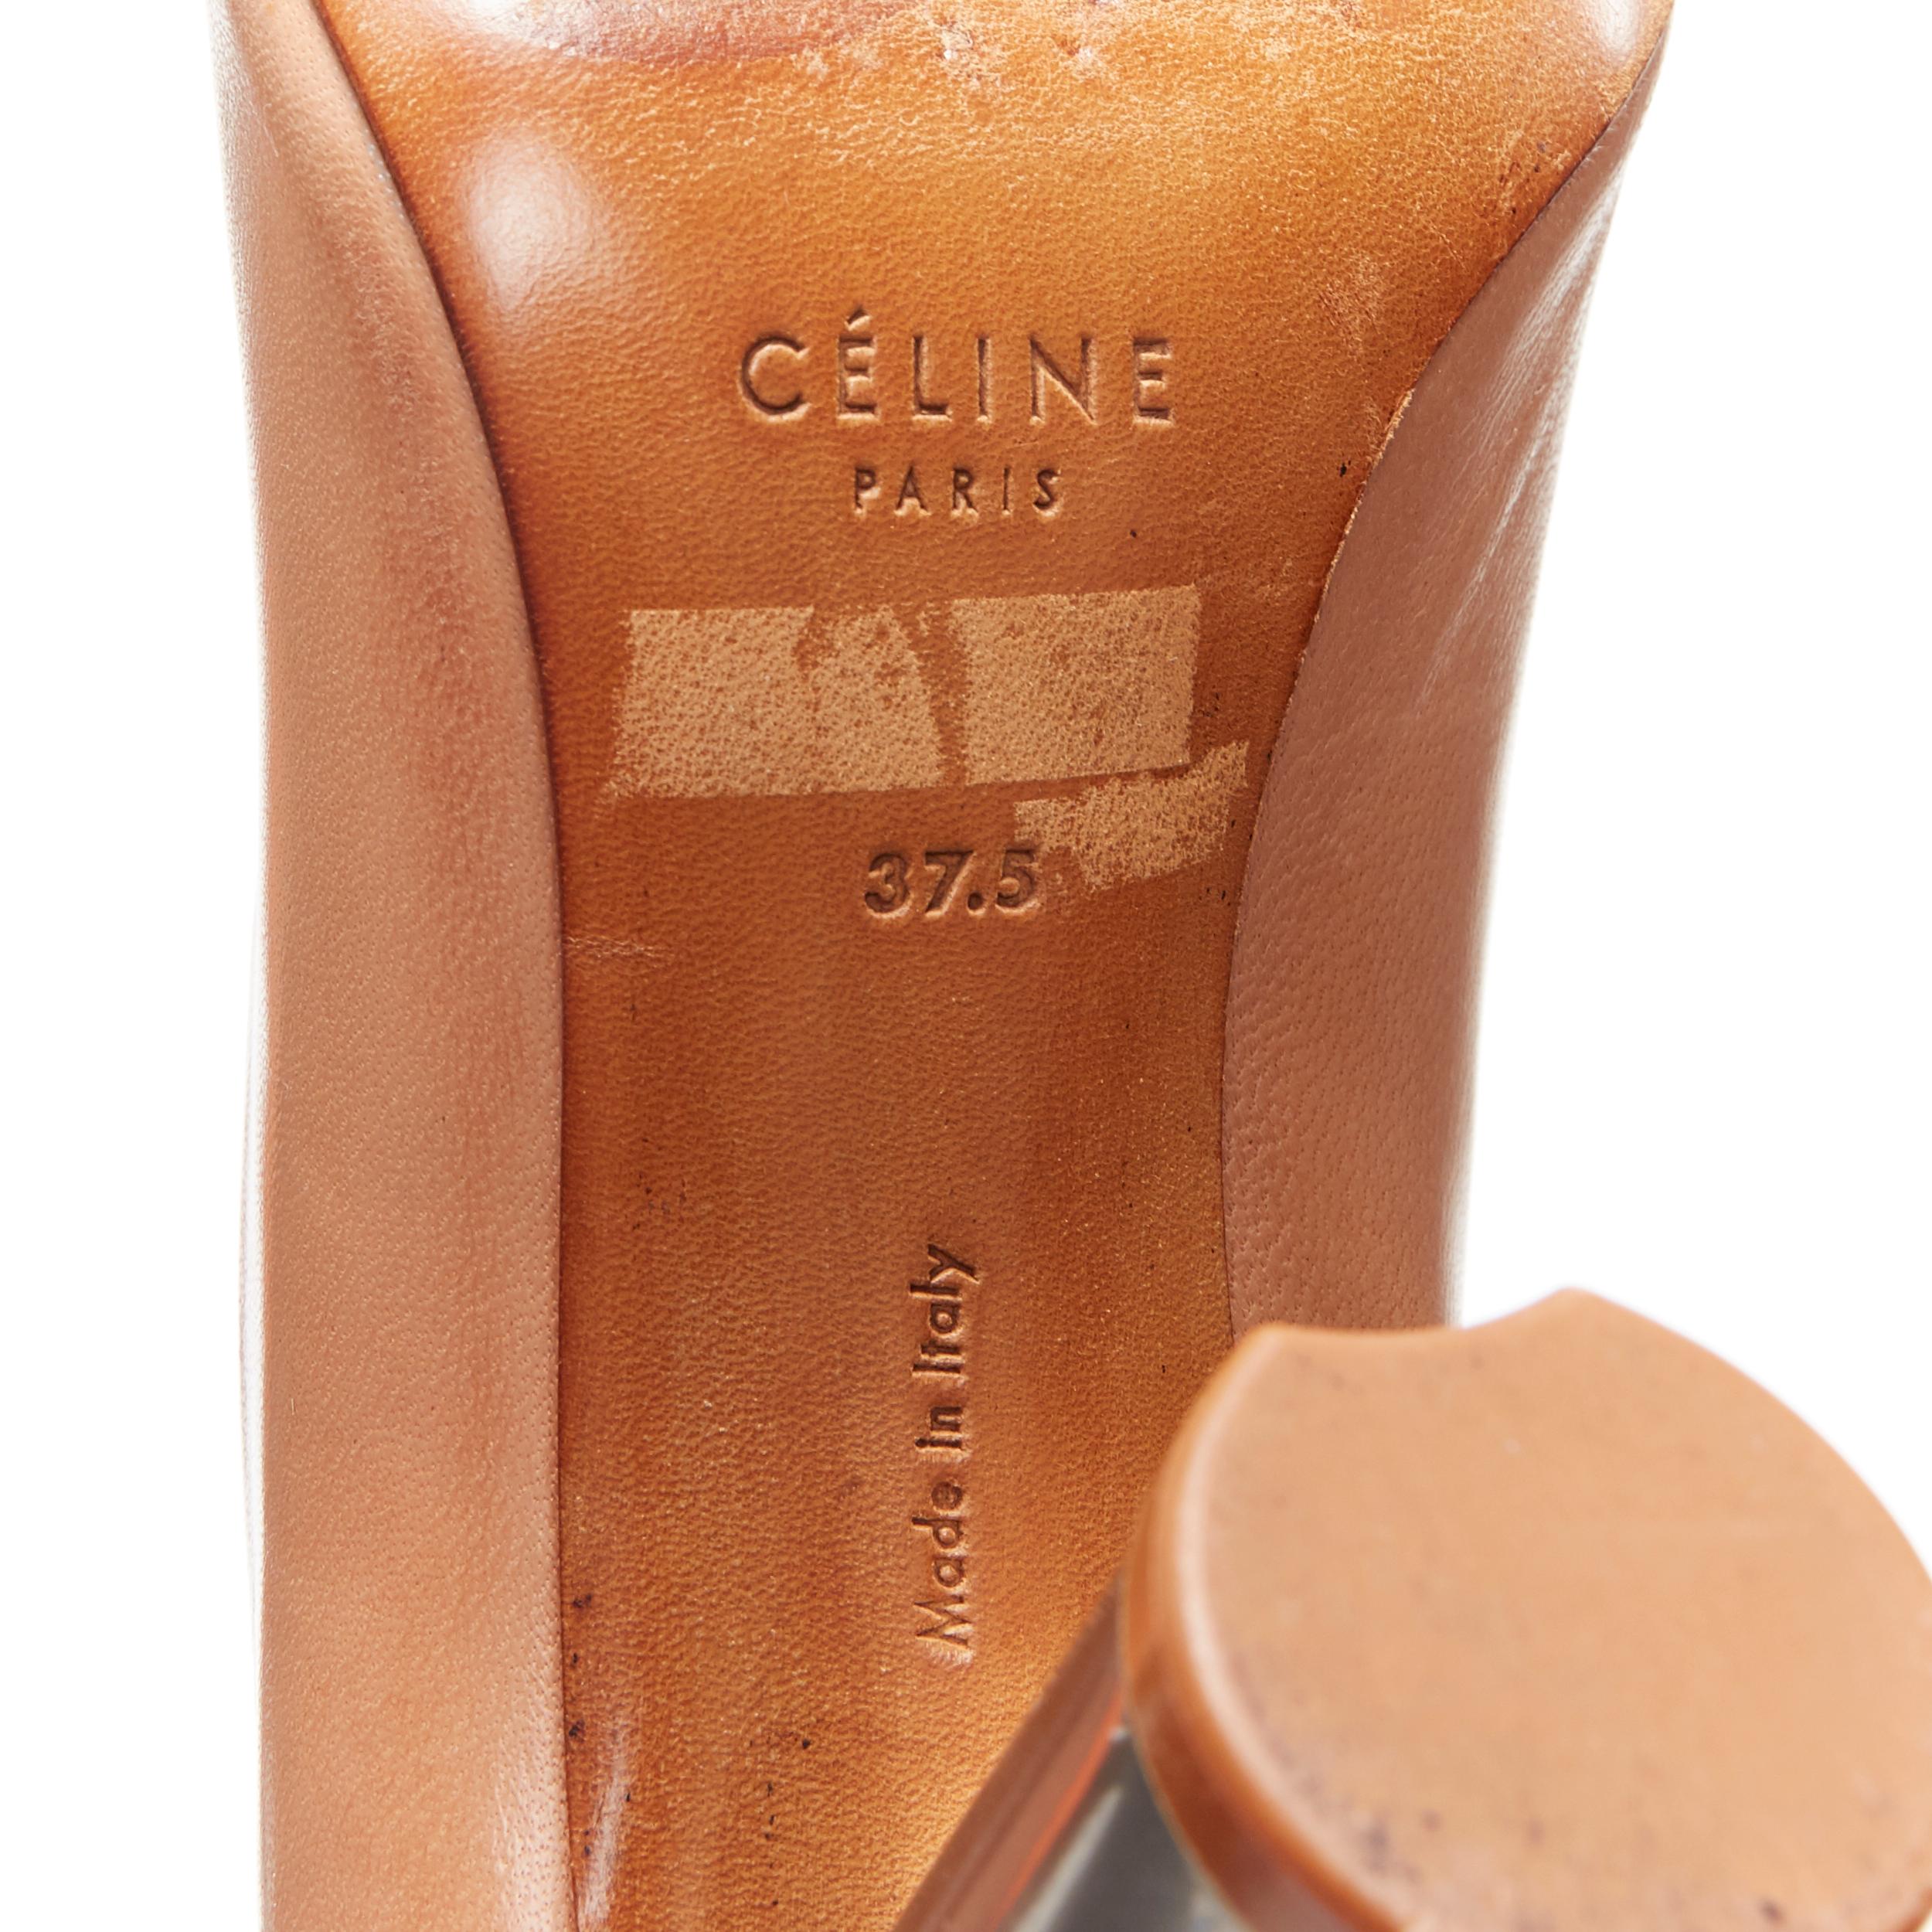 CELINE PHOEBE PHILO tan brown leather open toe silver metal glove heel EU37.5 4